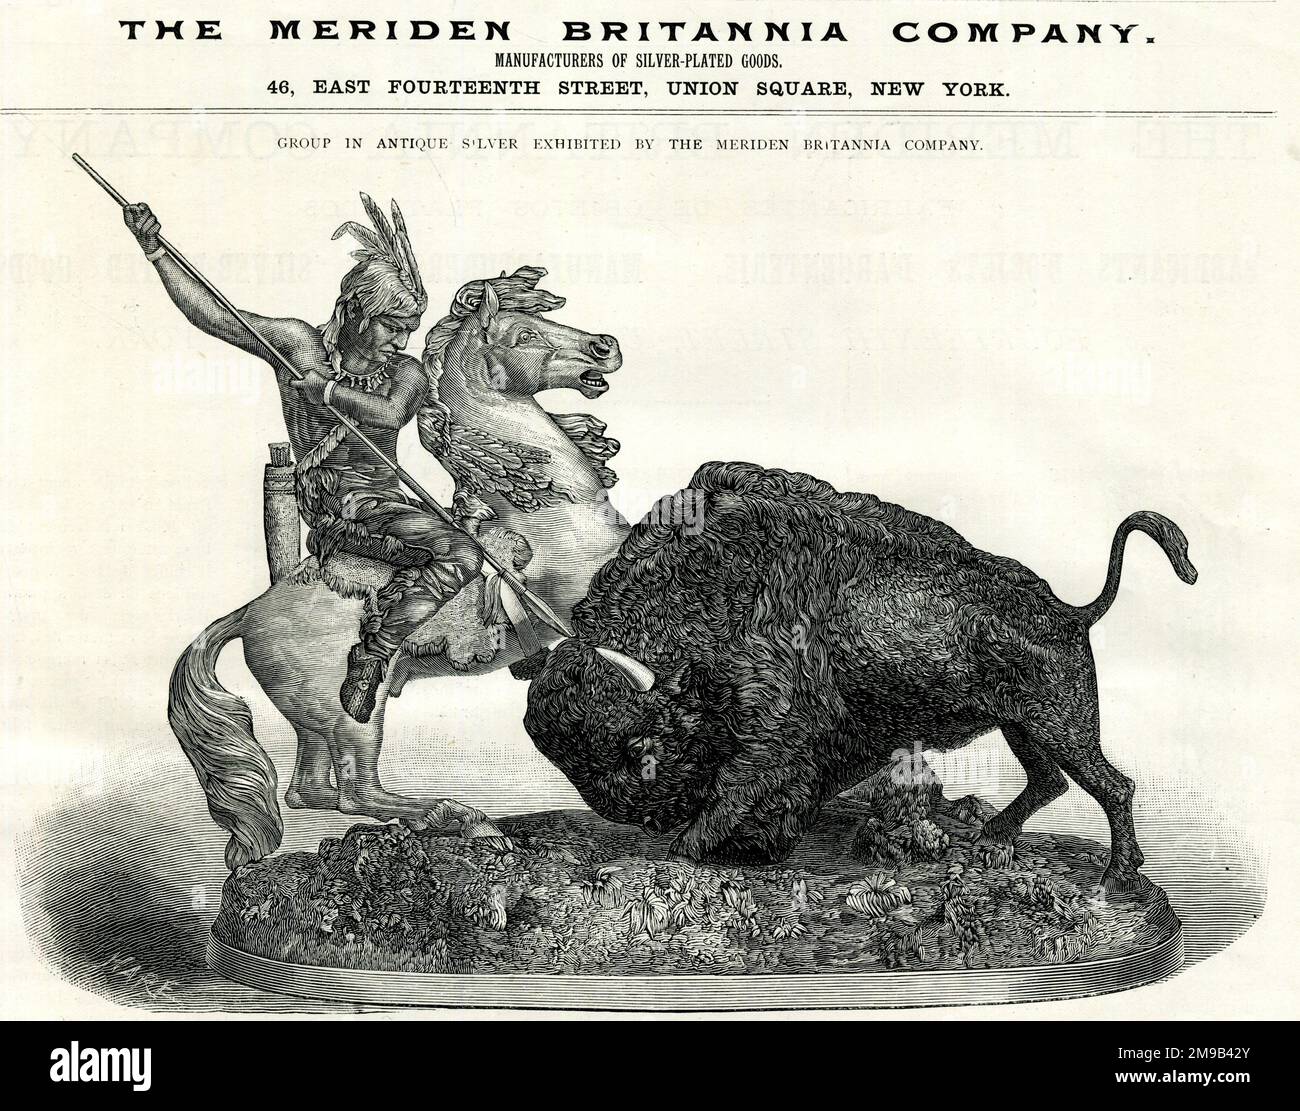 Hunting the Buffalo, Meriden Britannia Company, antique silver item, Universal Exhibition of Paris, 1889 Stock Photo